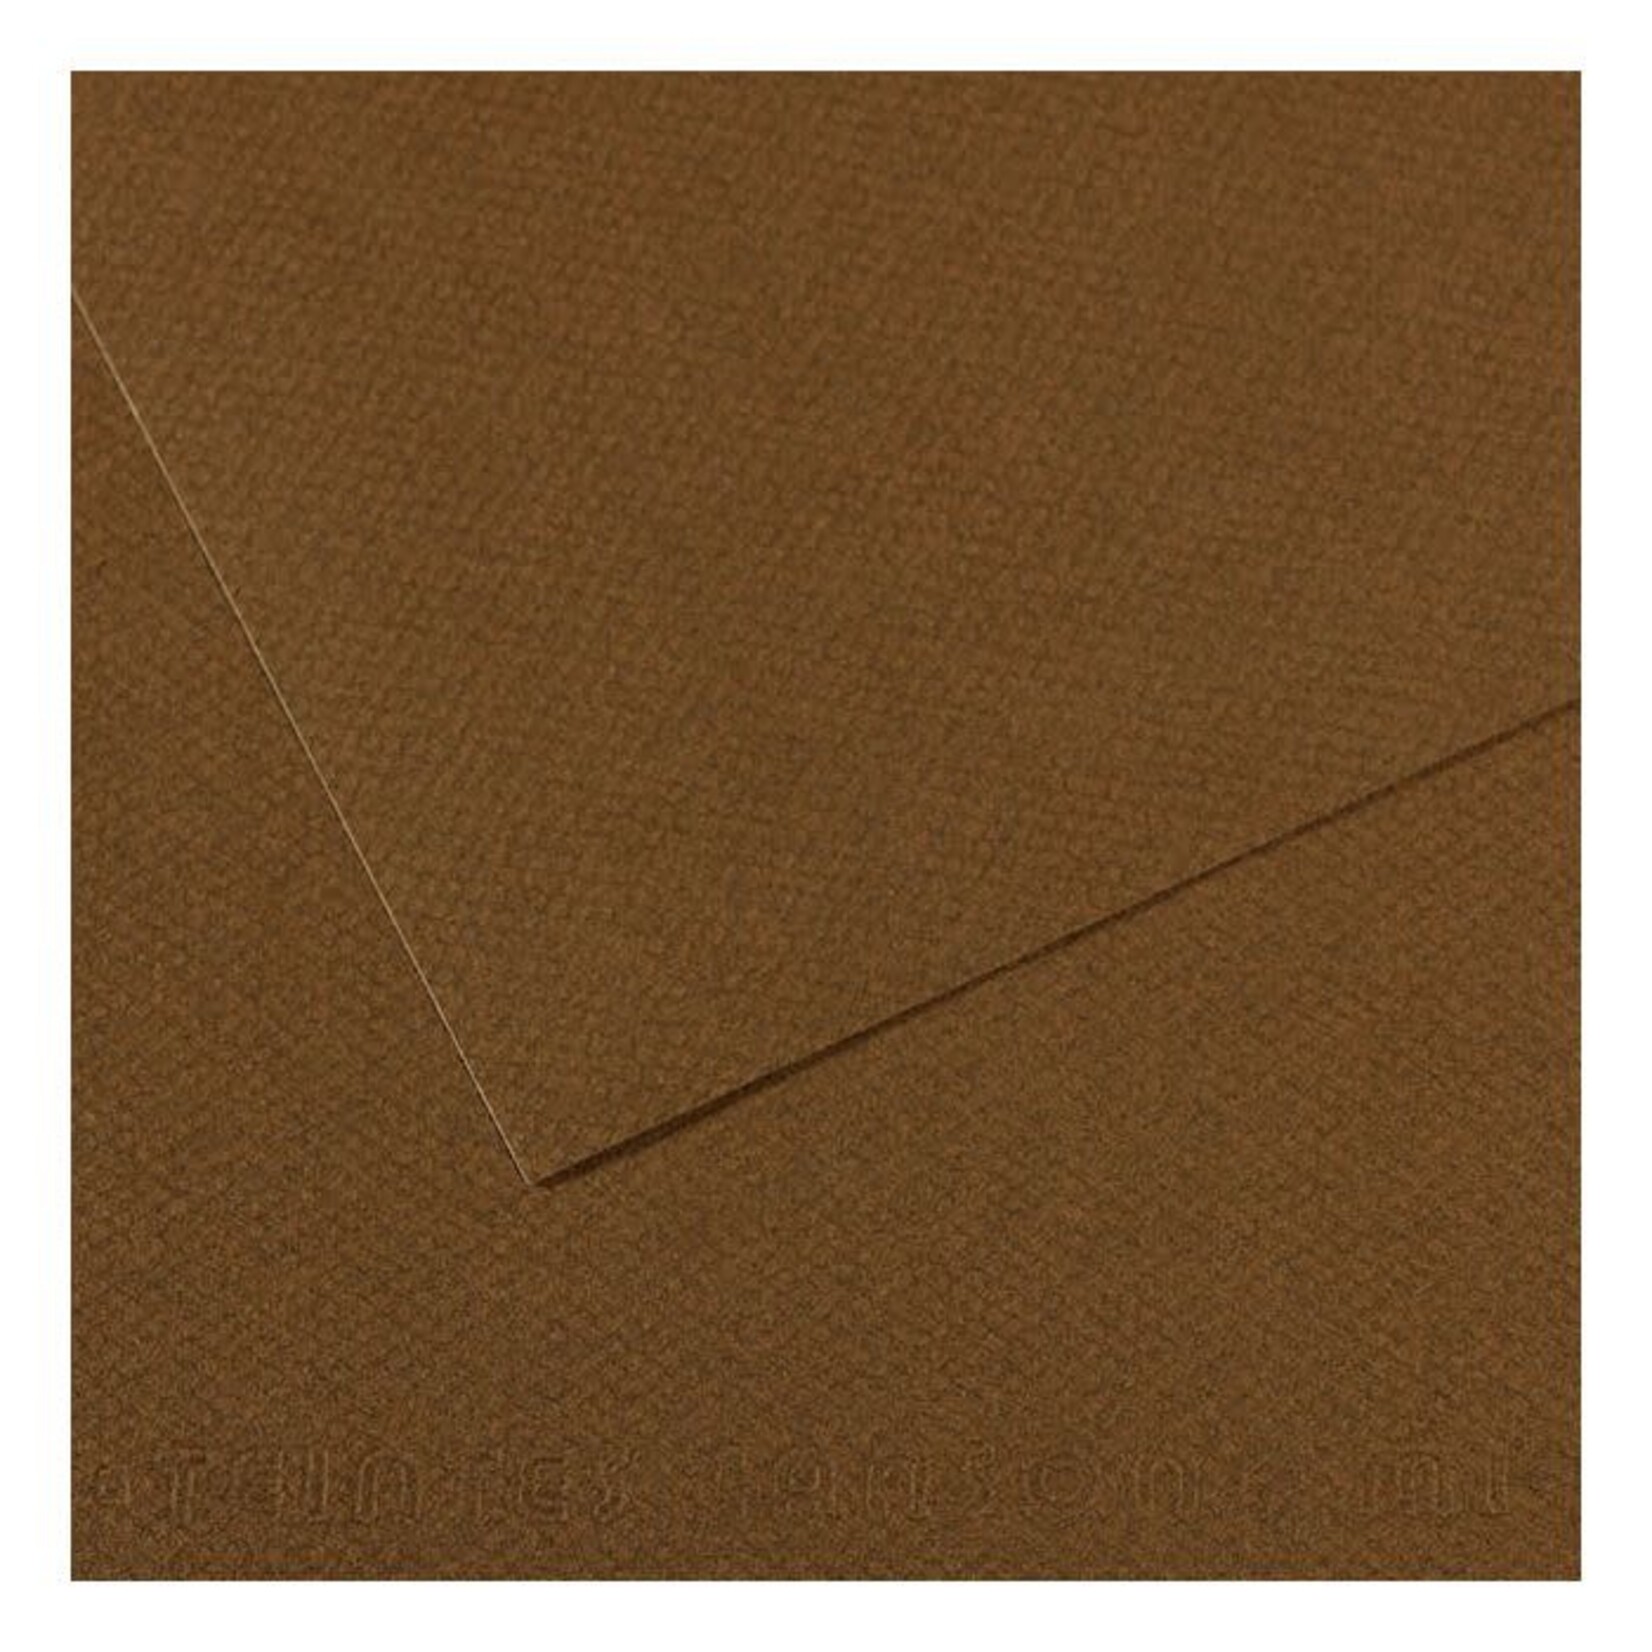 Canson Mi-Teintes Paper Sheets, 19'' x 25'', Tobacco